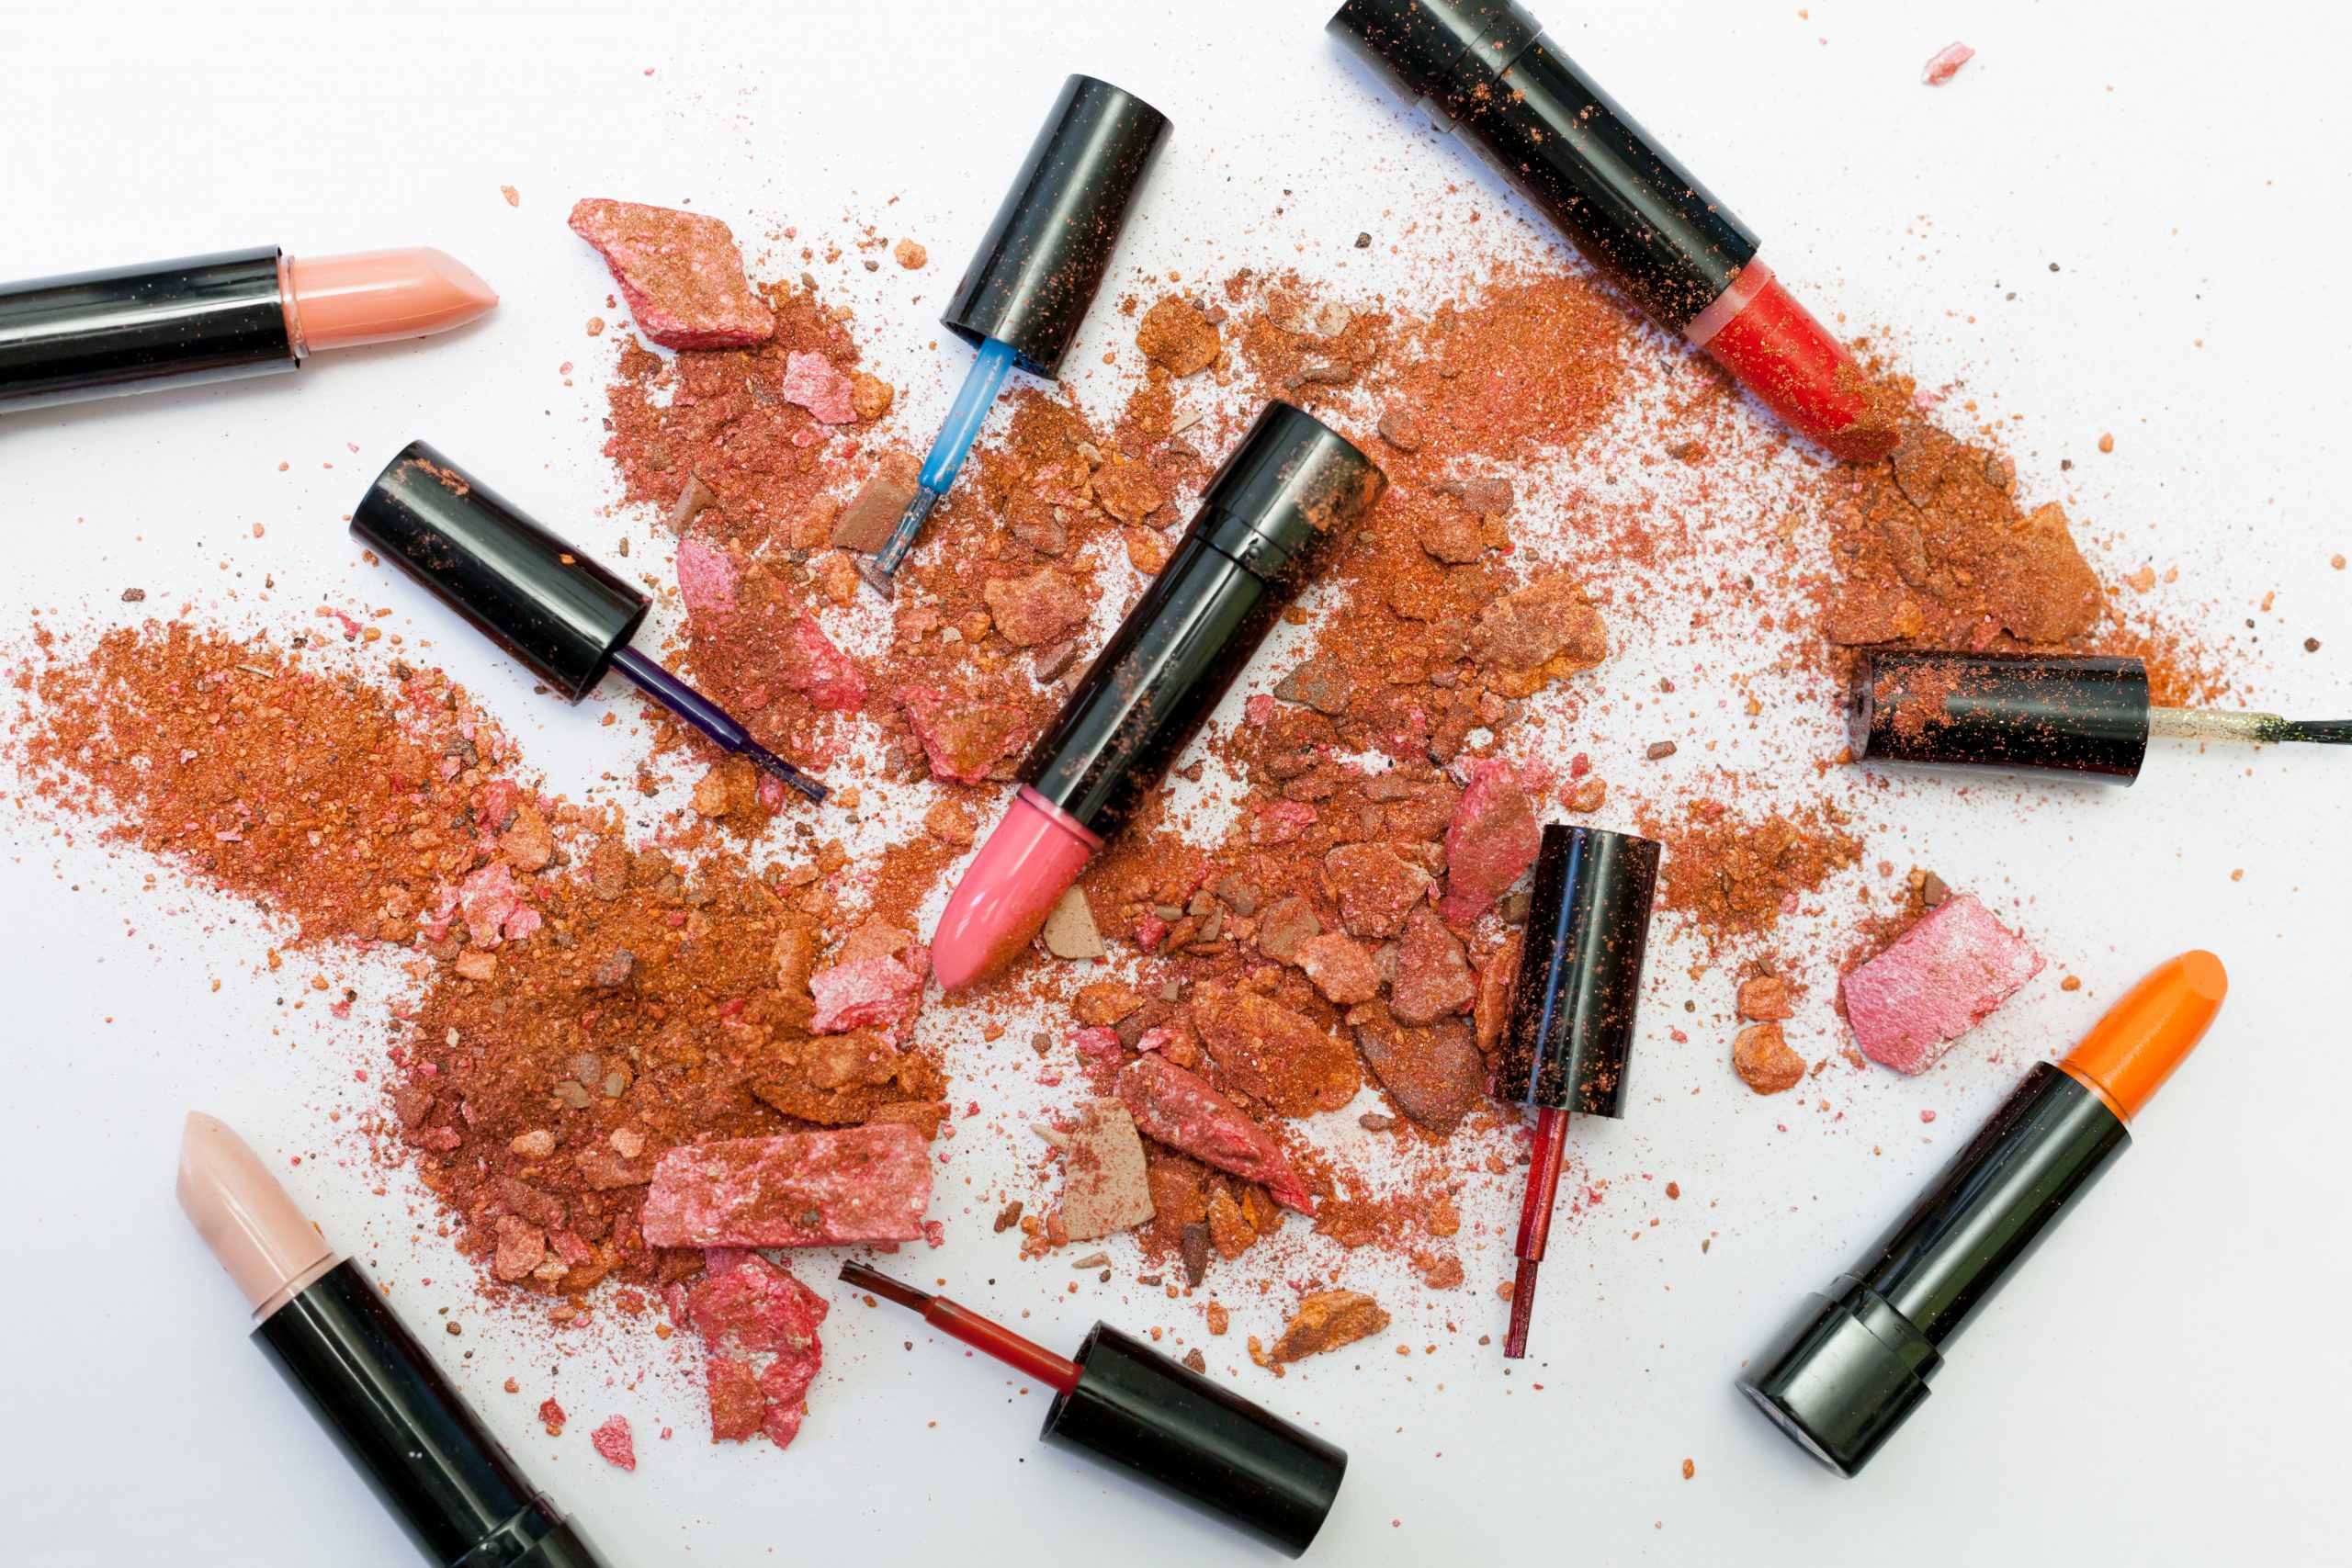 Lipsticks and Makeup Powder